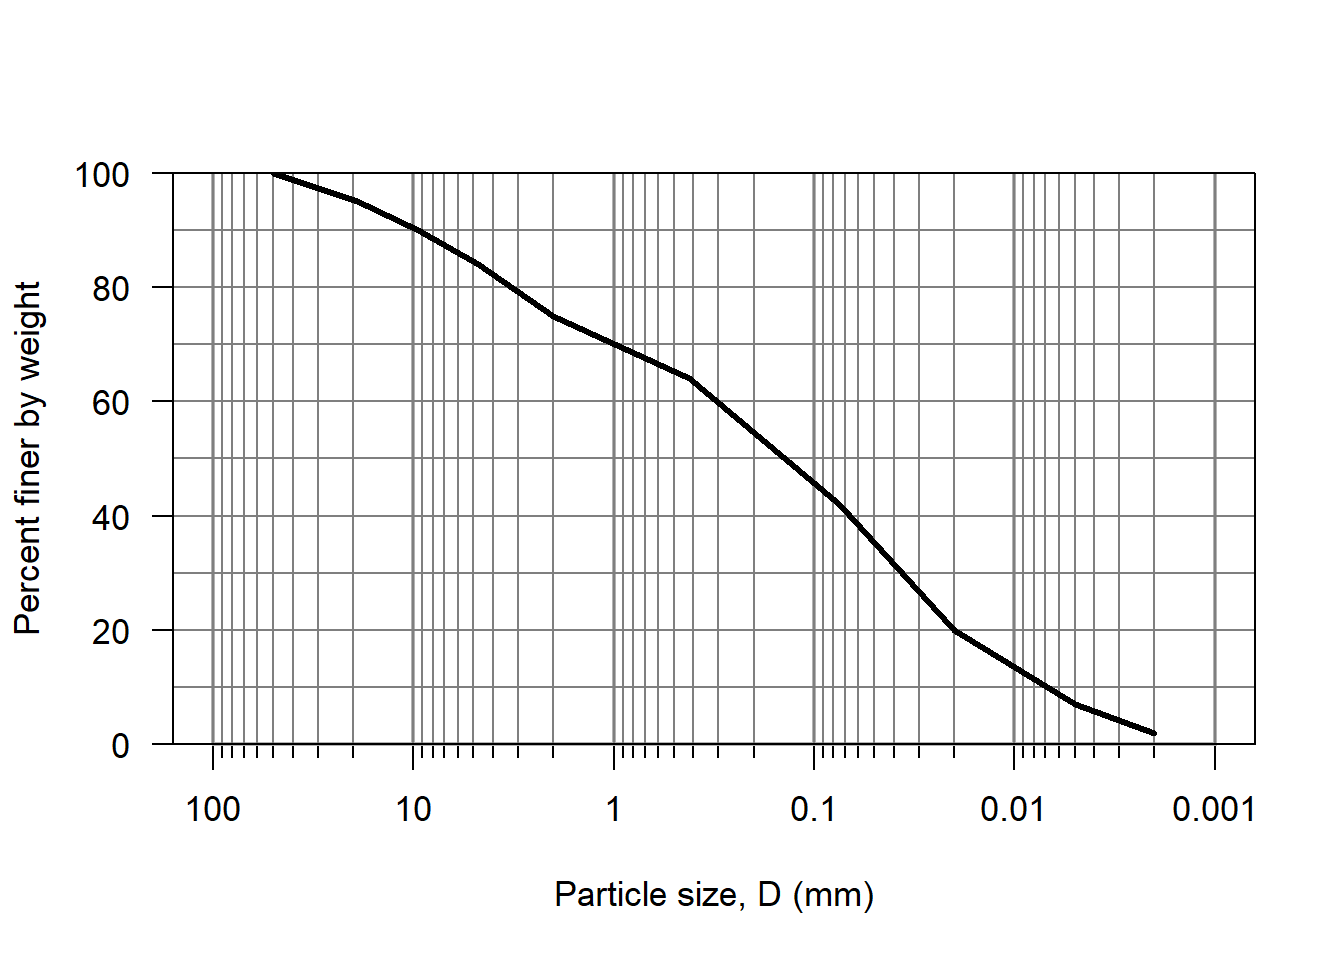 A grainsize distribution plot for the sample data.